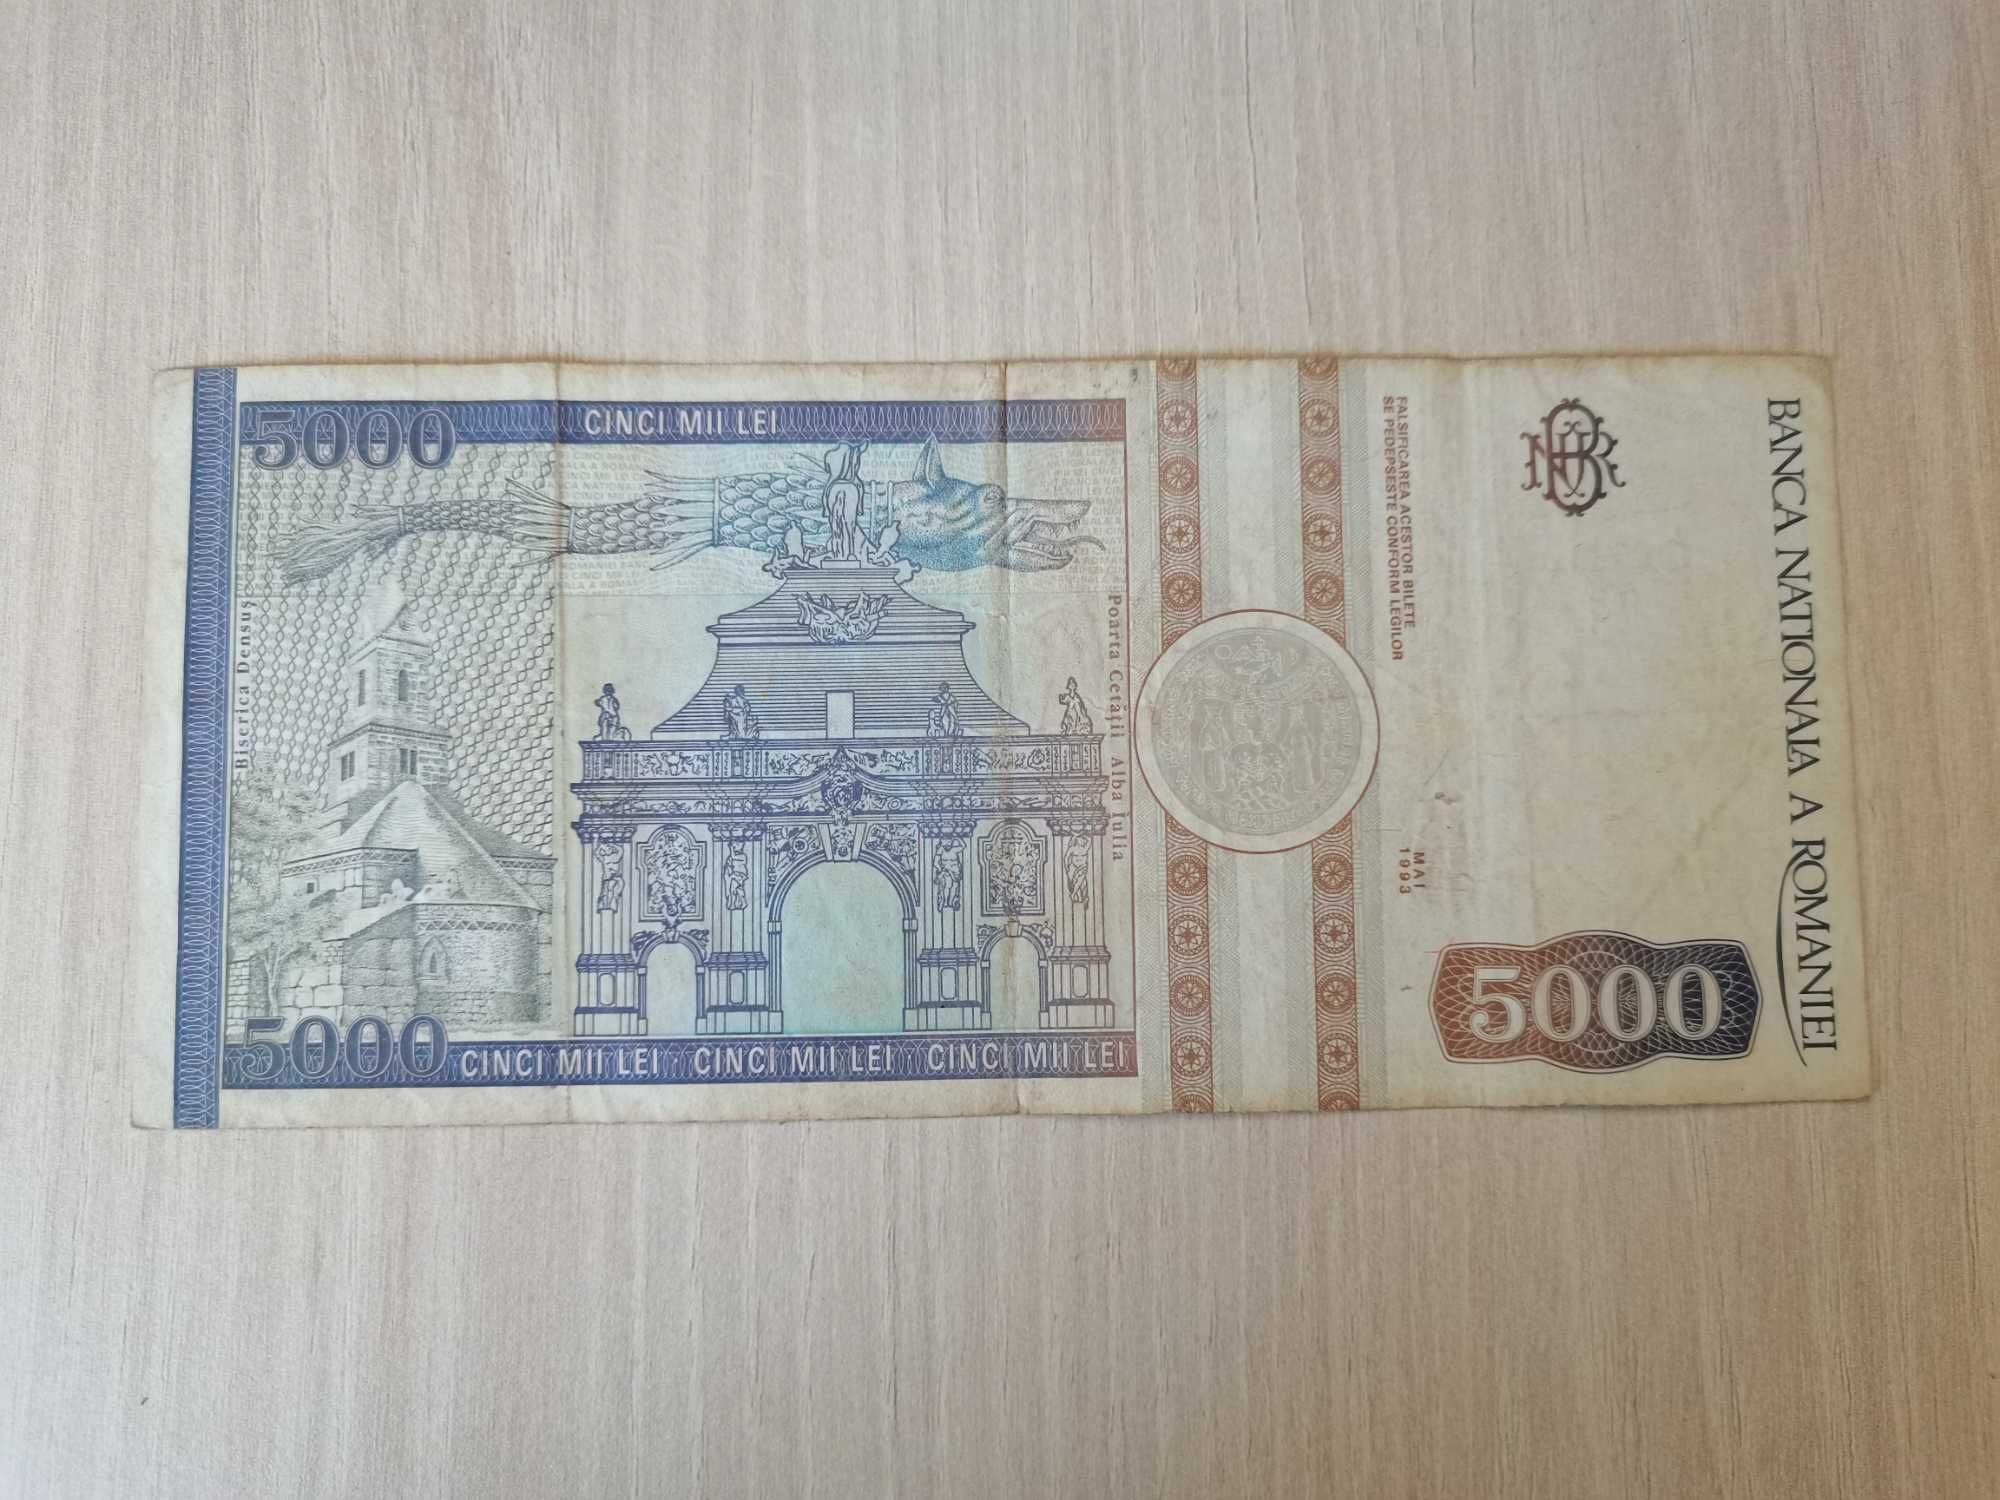 Bancnote vechi Ro - Bancnota de 5000 lei 1993